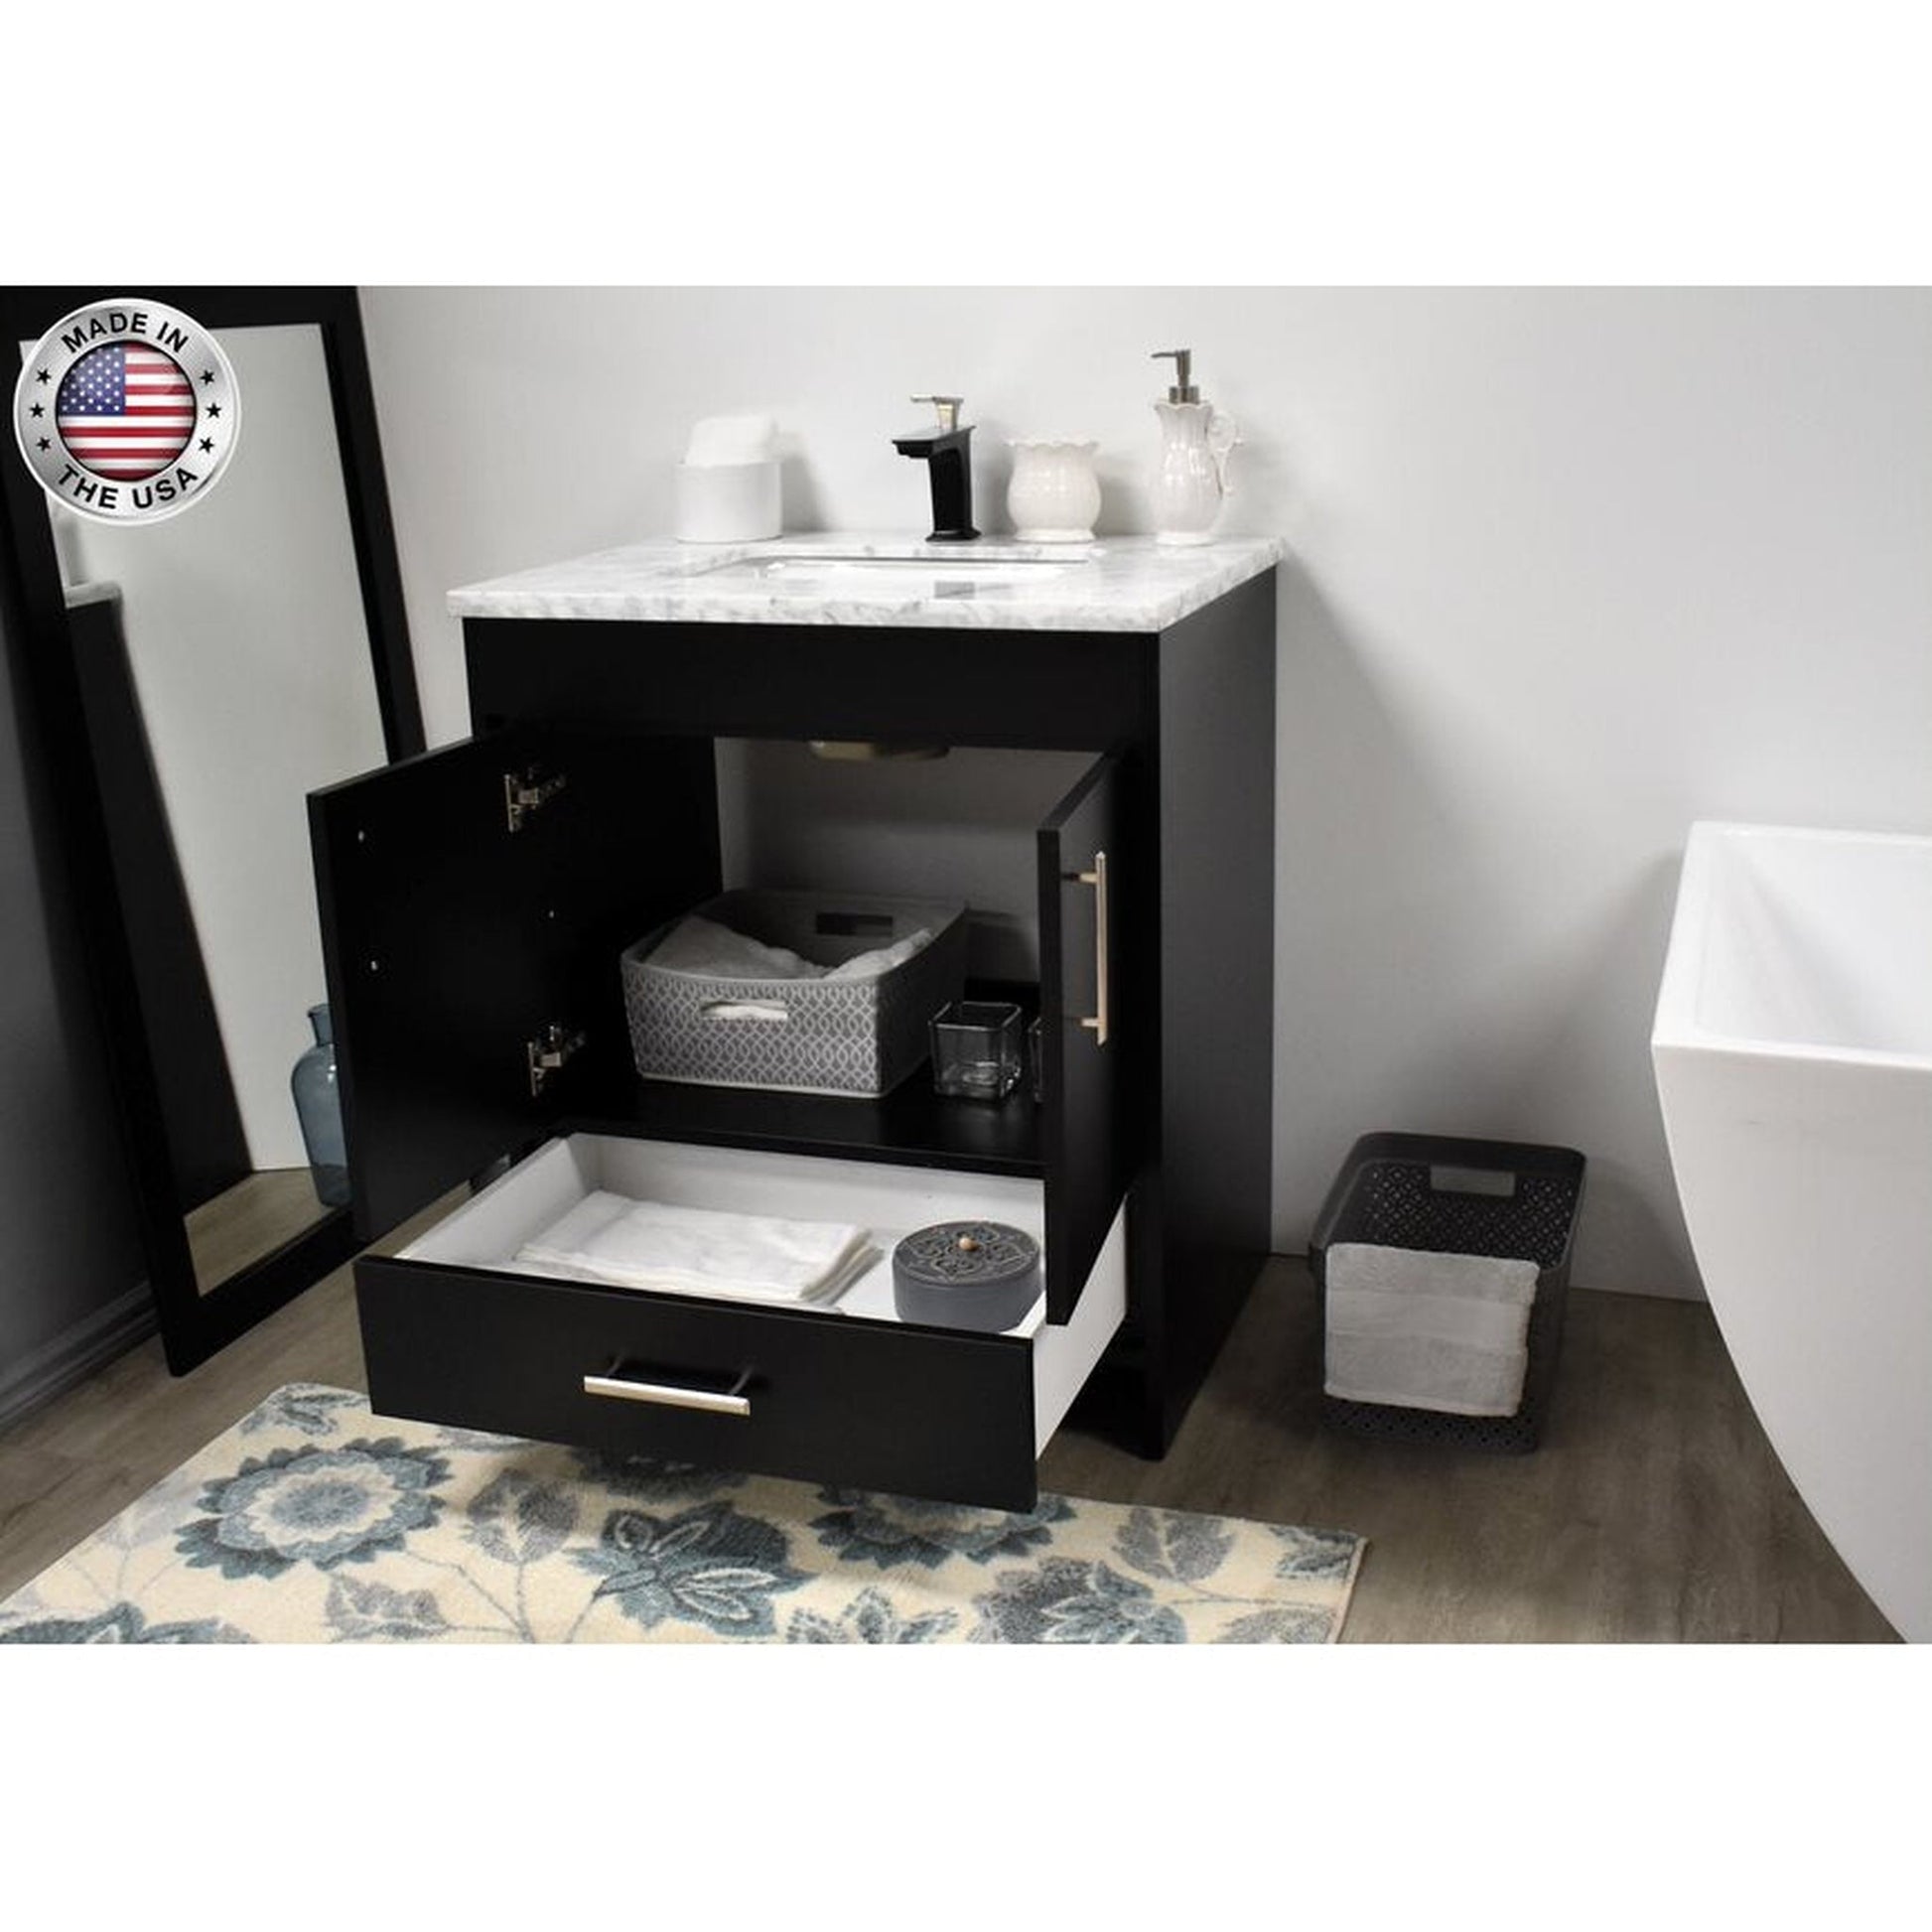 Volpa USA Capri 30" x 22" Black Freestanding Modern Bathroom Vanity With Preinstalled Undermount Sink And Carrara Marble top With Brushed Nickel Edge Handles